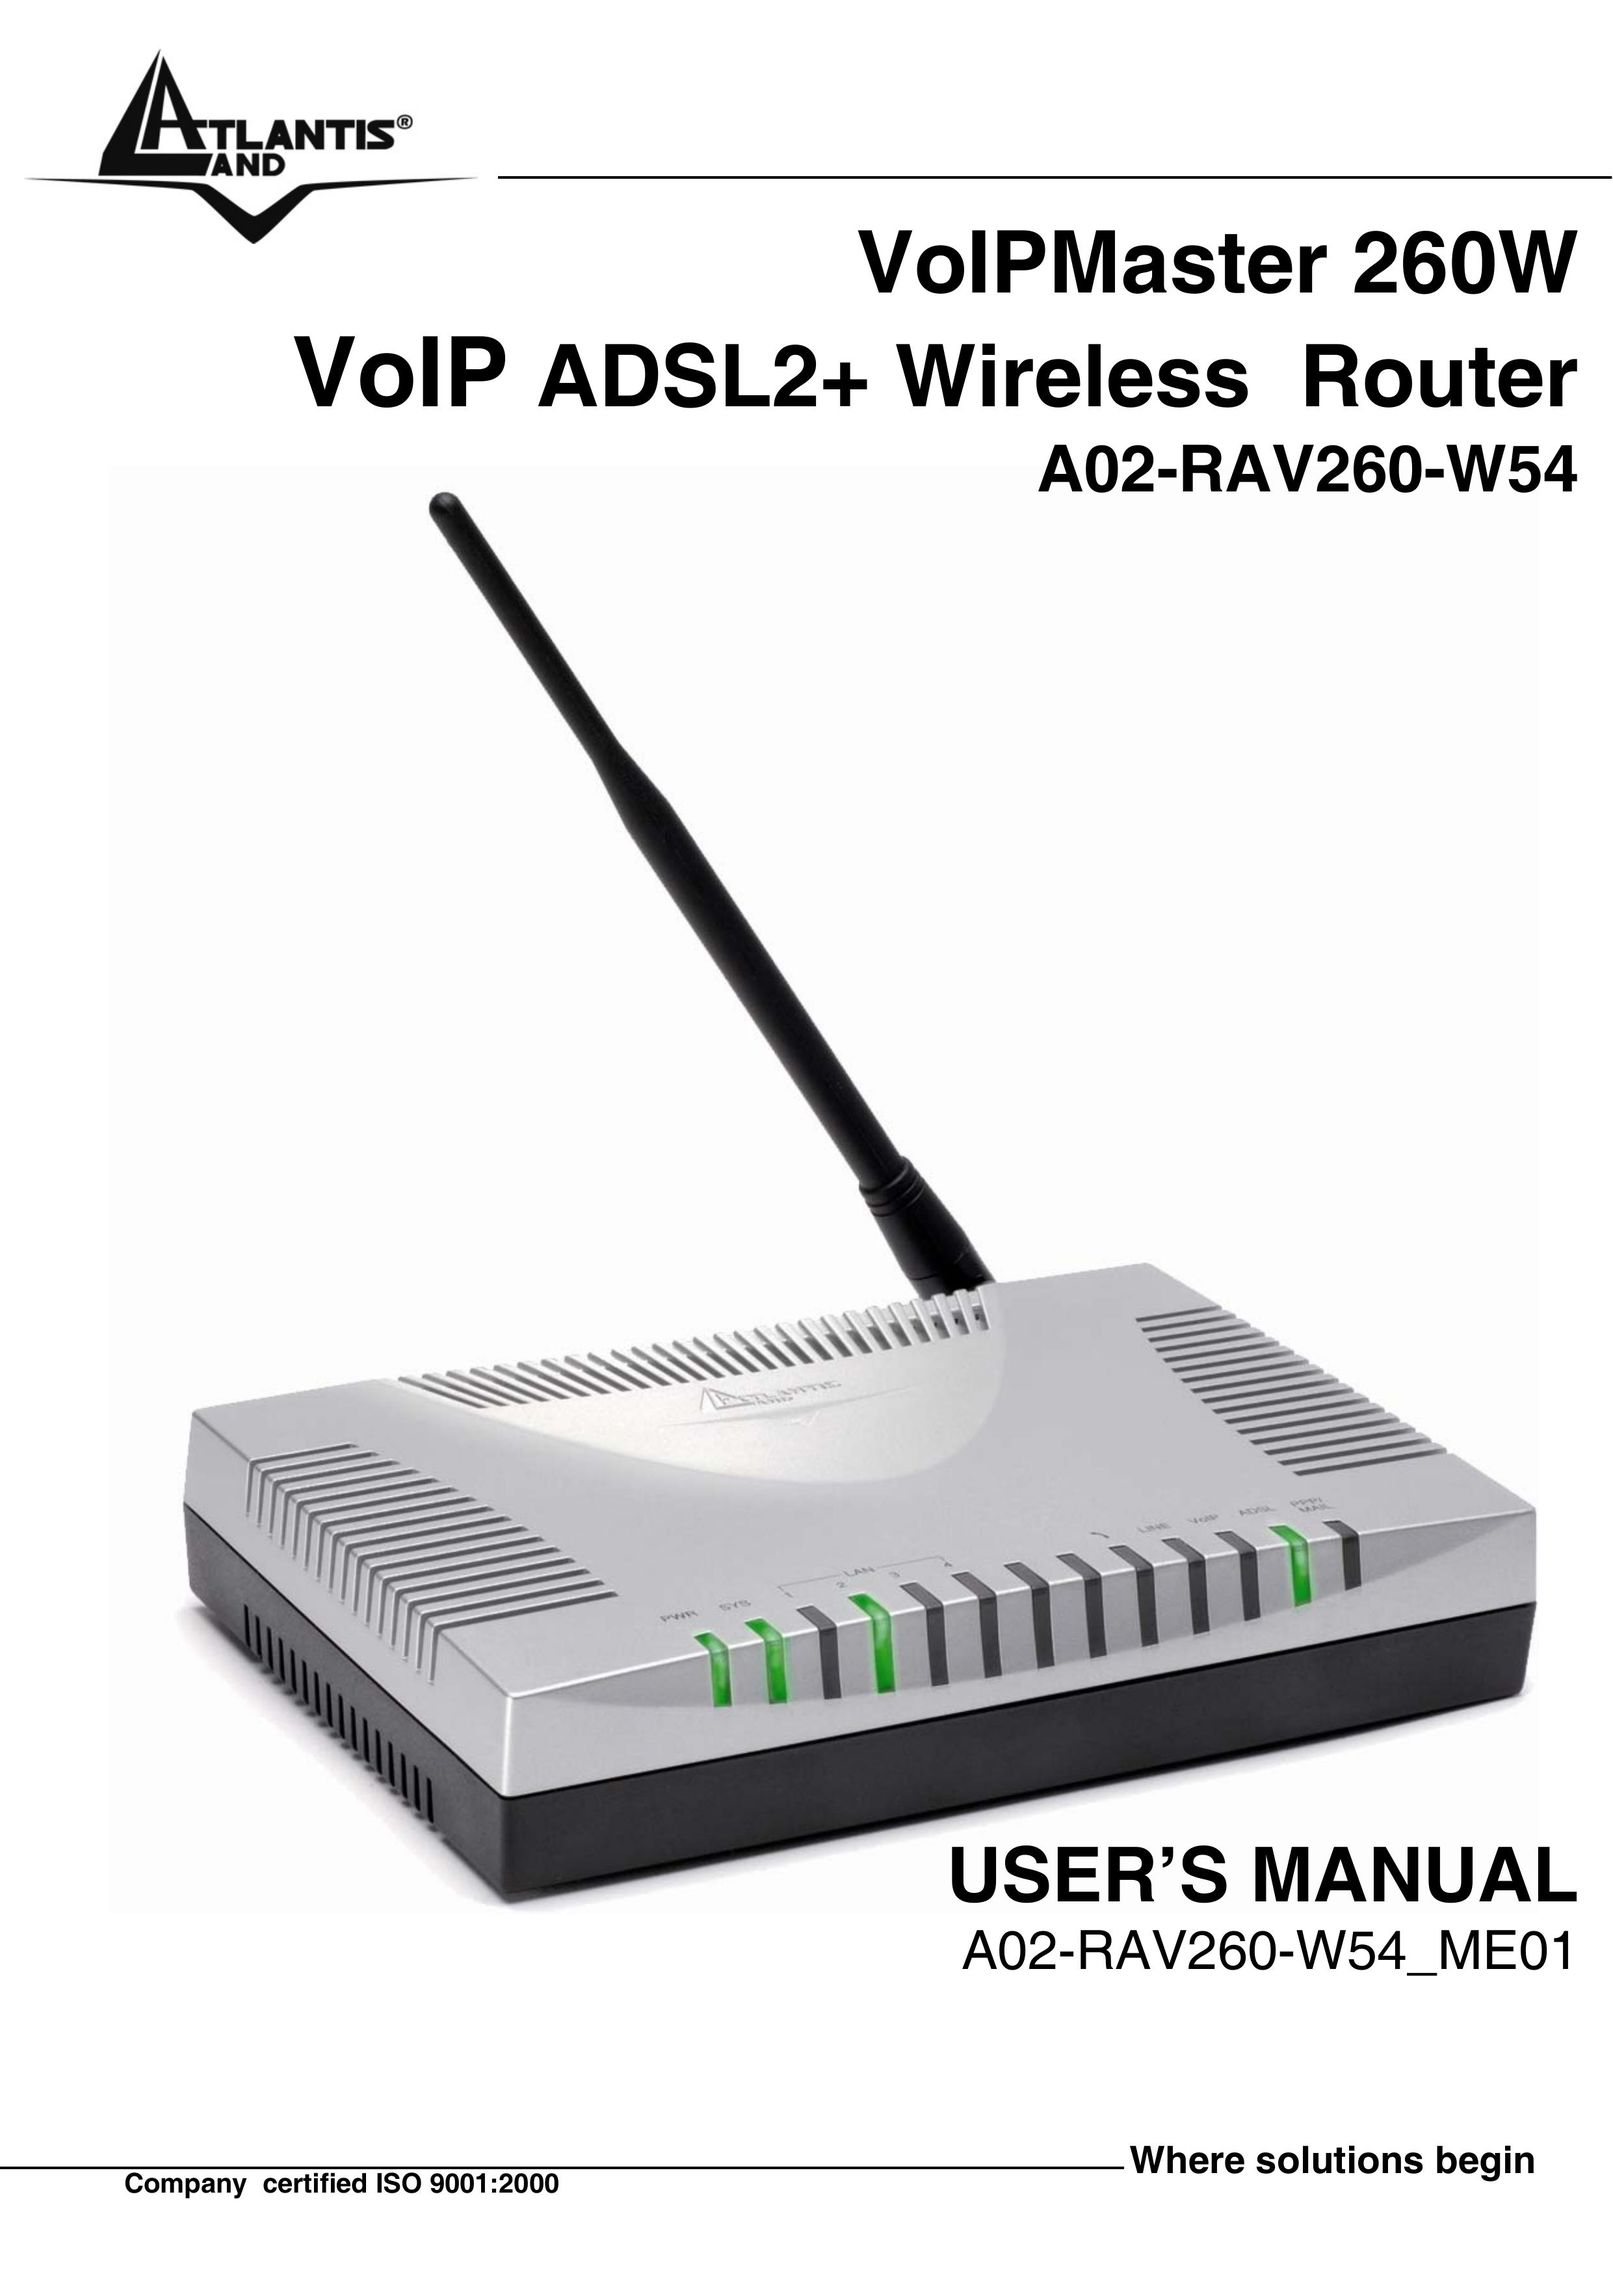 Atlantis Land A02-RAV260-W54 Network Router User Manual